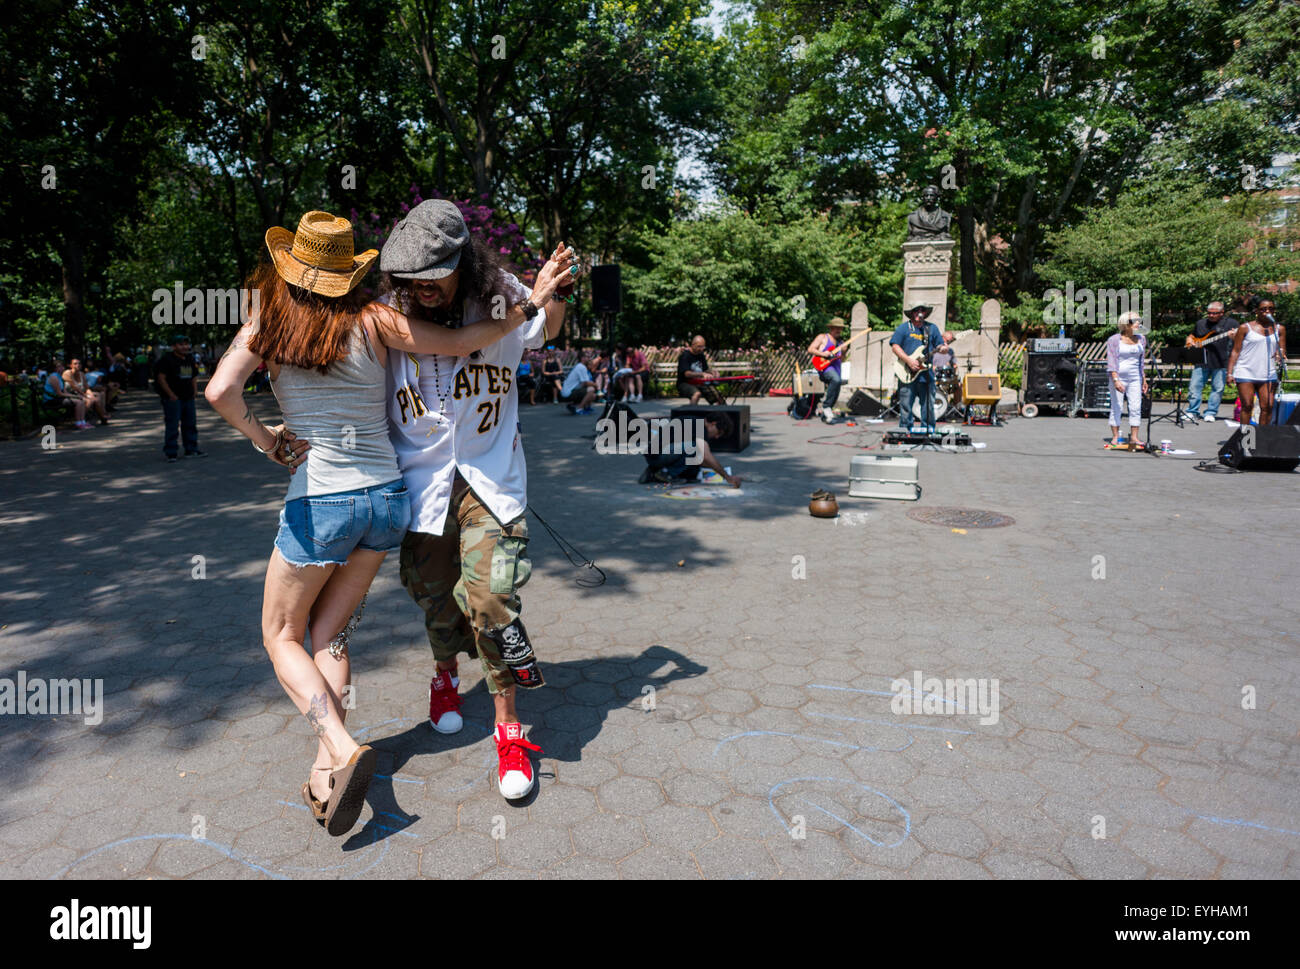 New York, NY-26 Juli 2015 - Mann und Frau tanzen zu einer Rockband in Washington Square Park © Stacy Walsh Rosenstock/Alamy Stockfoto